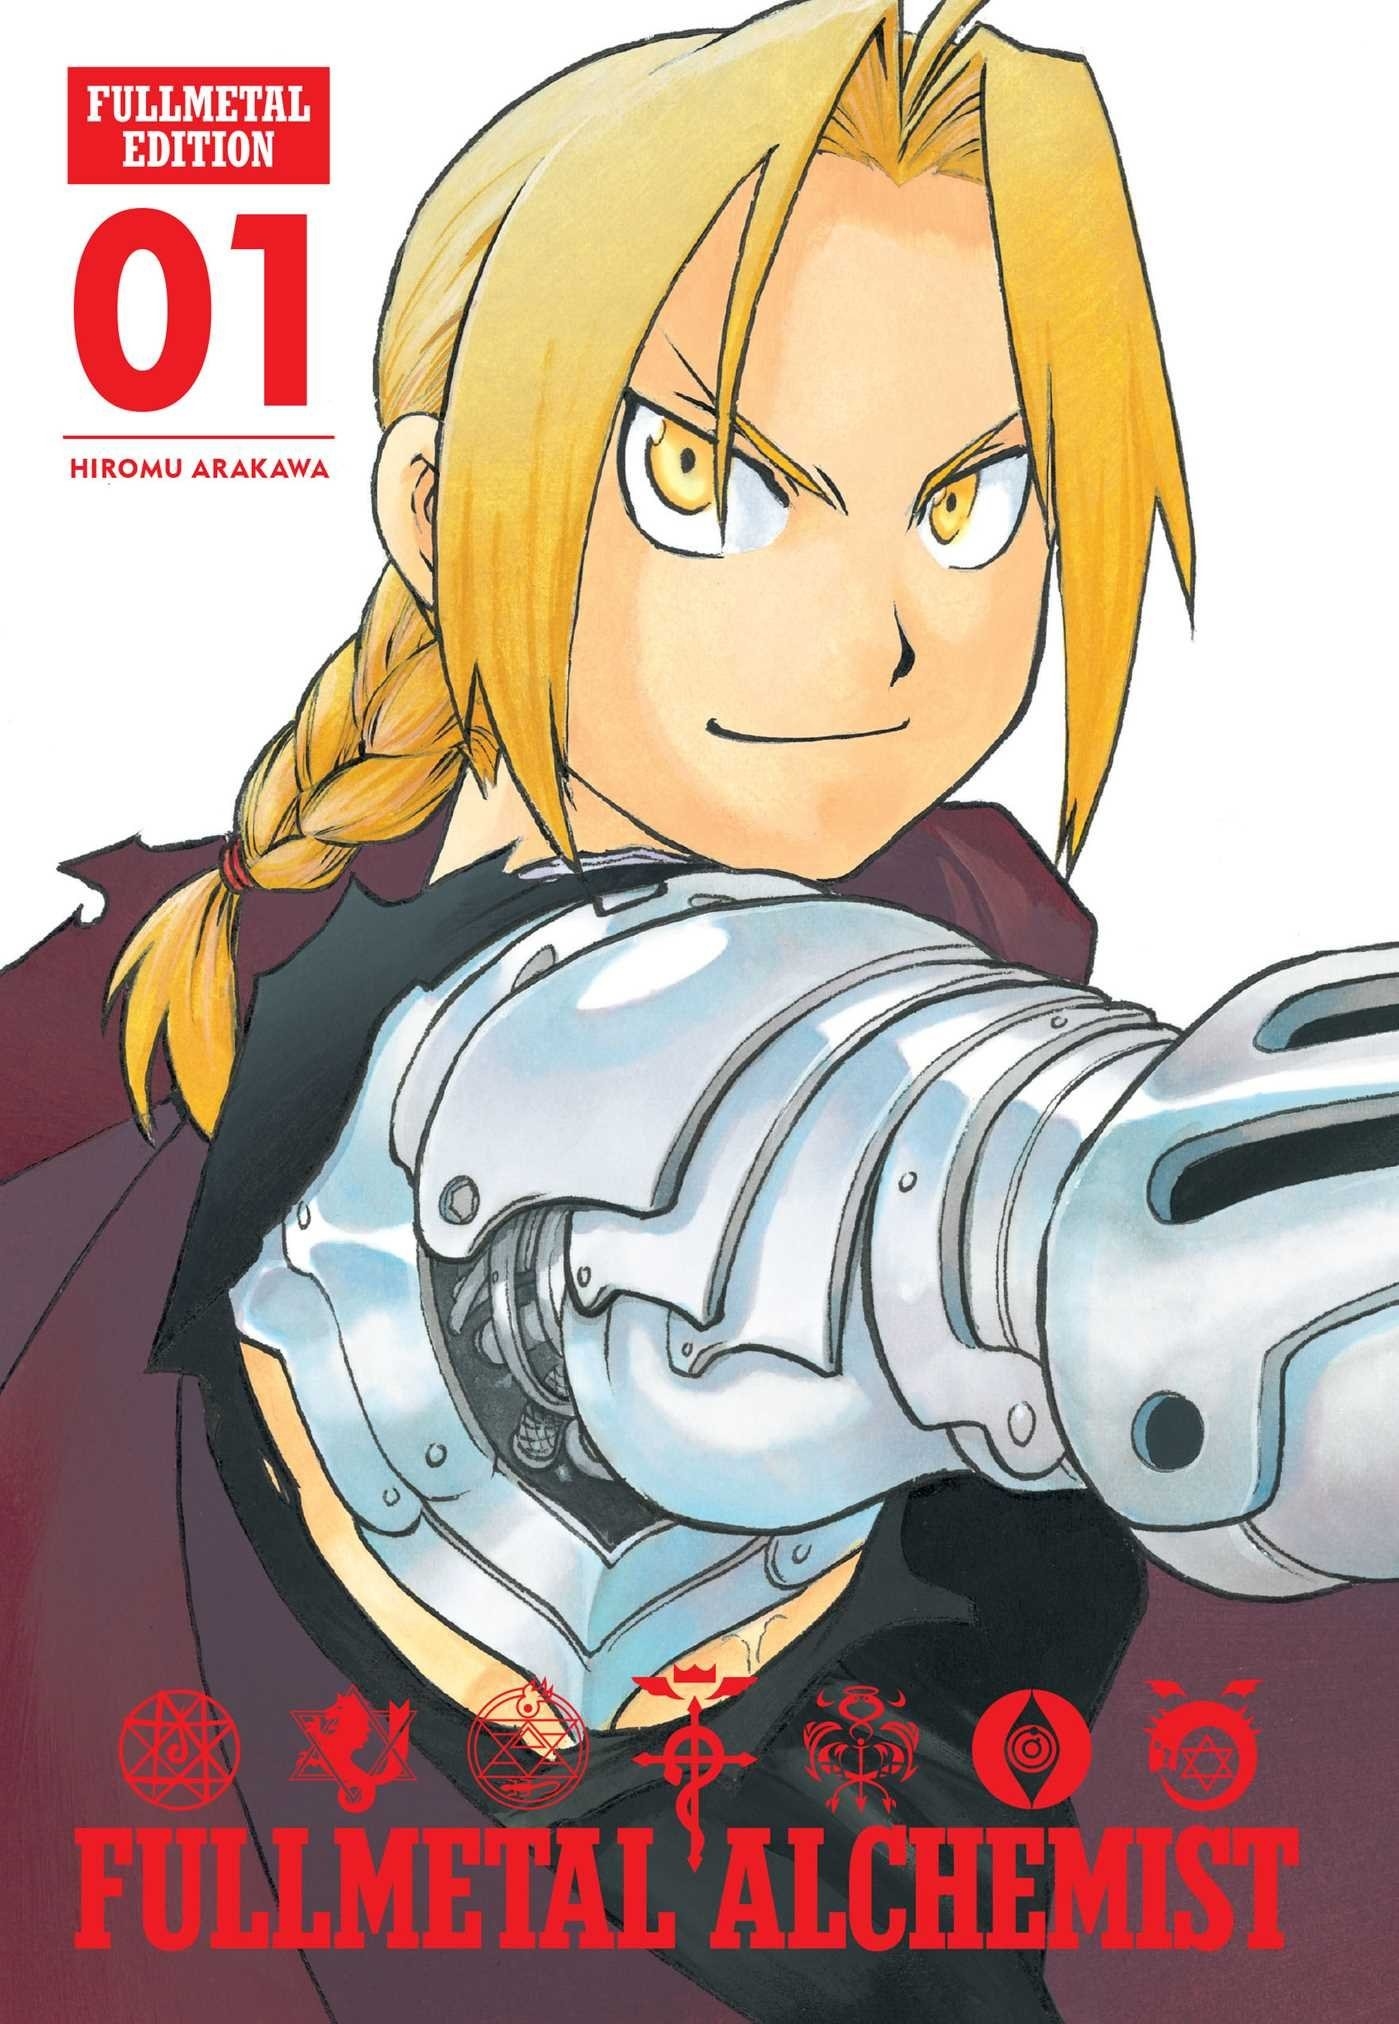 Manga de Fullmetal Alchemist en inglés